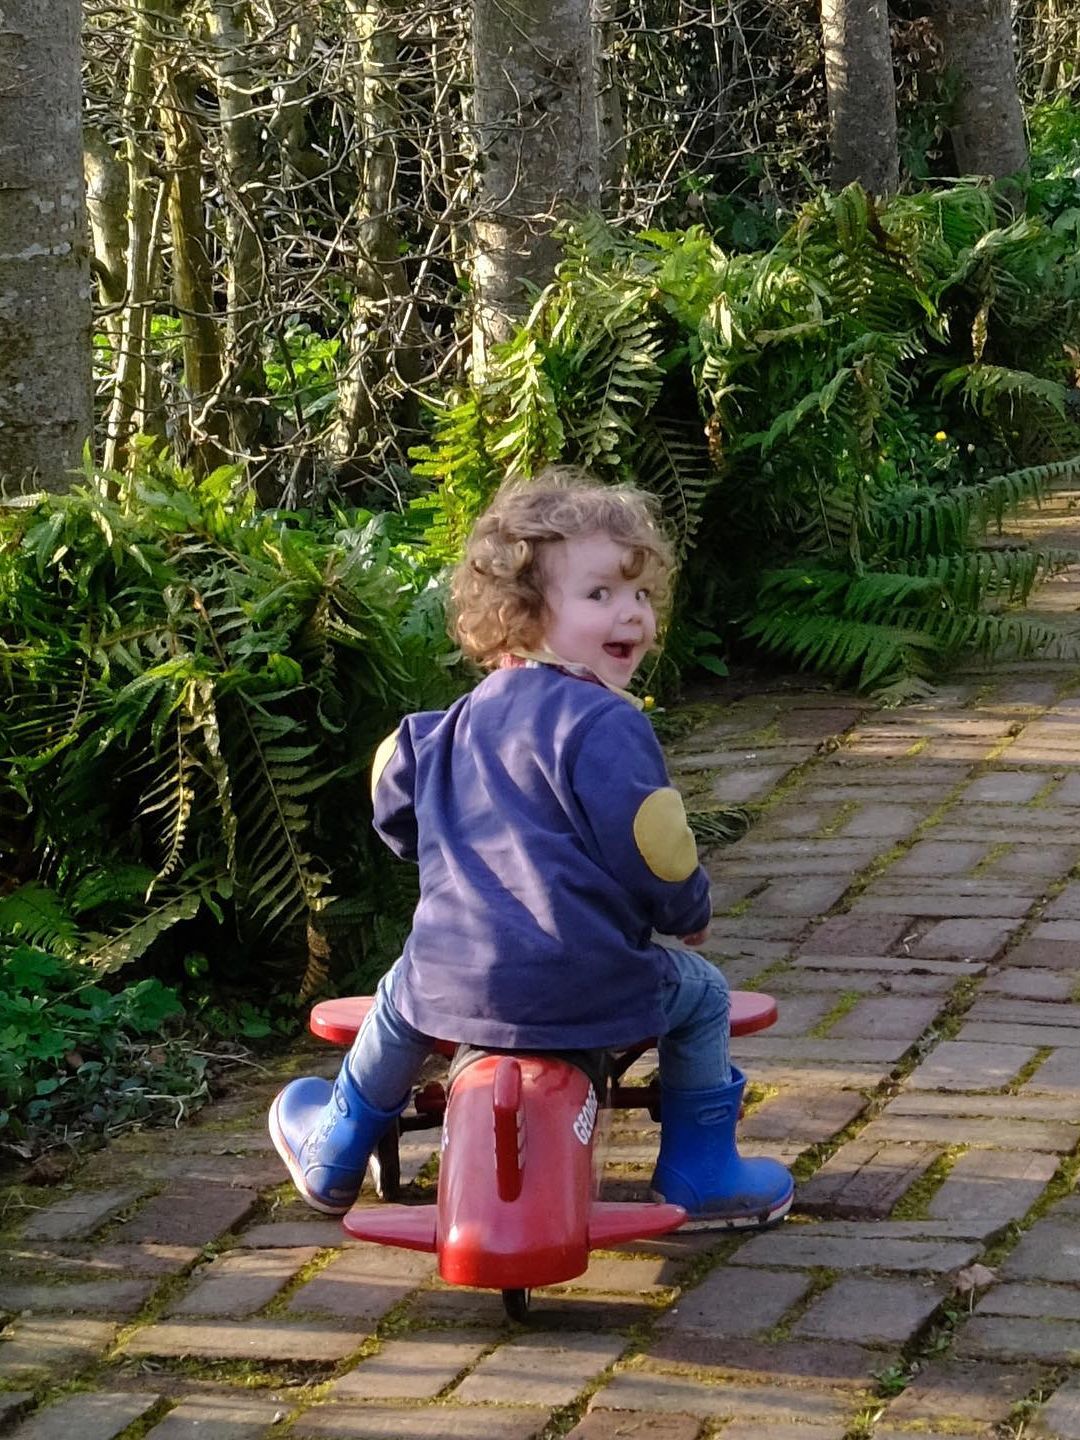 young boy riding a bike in garden